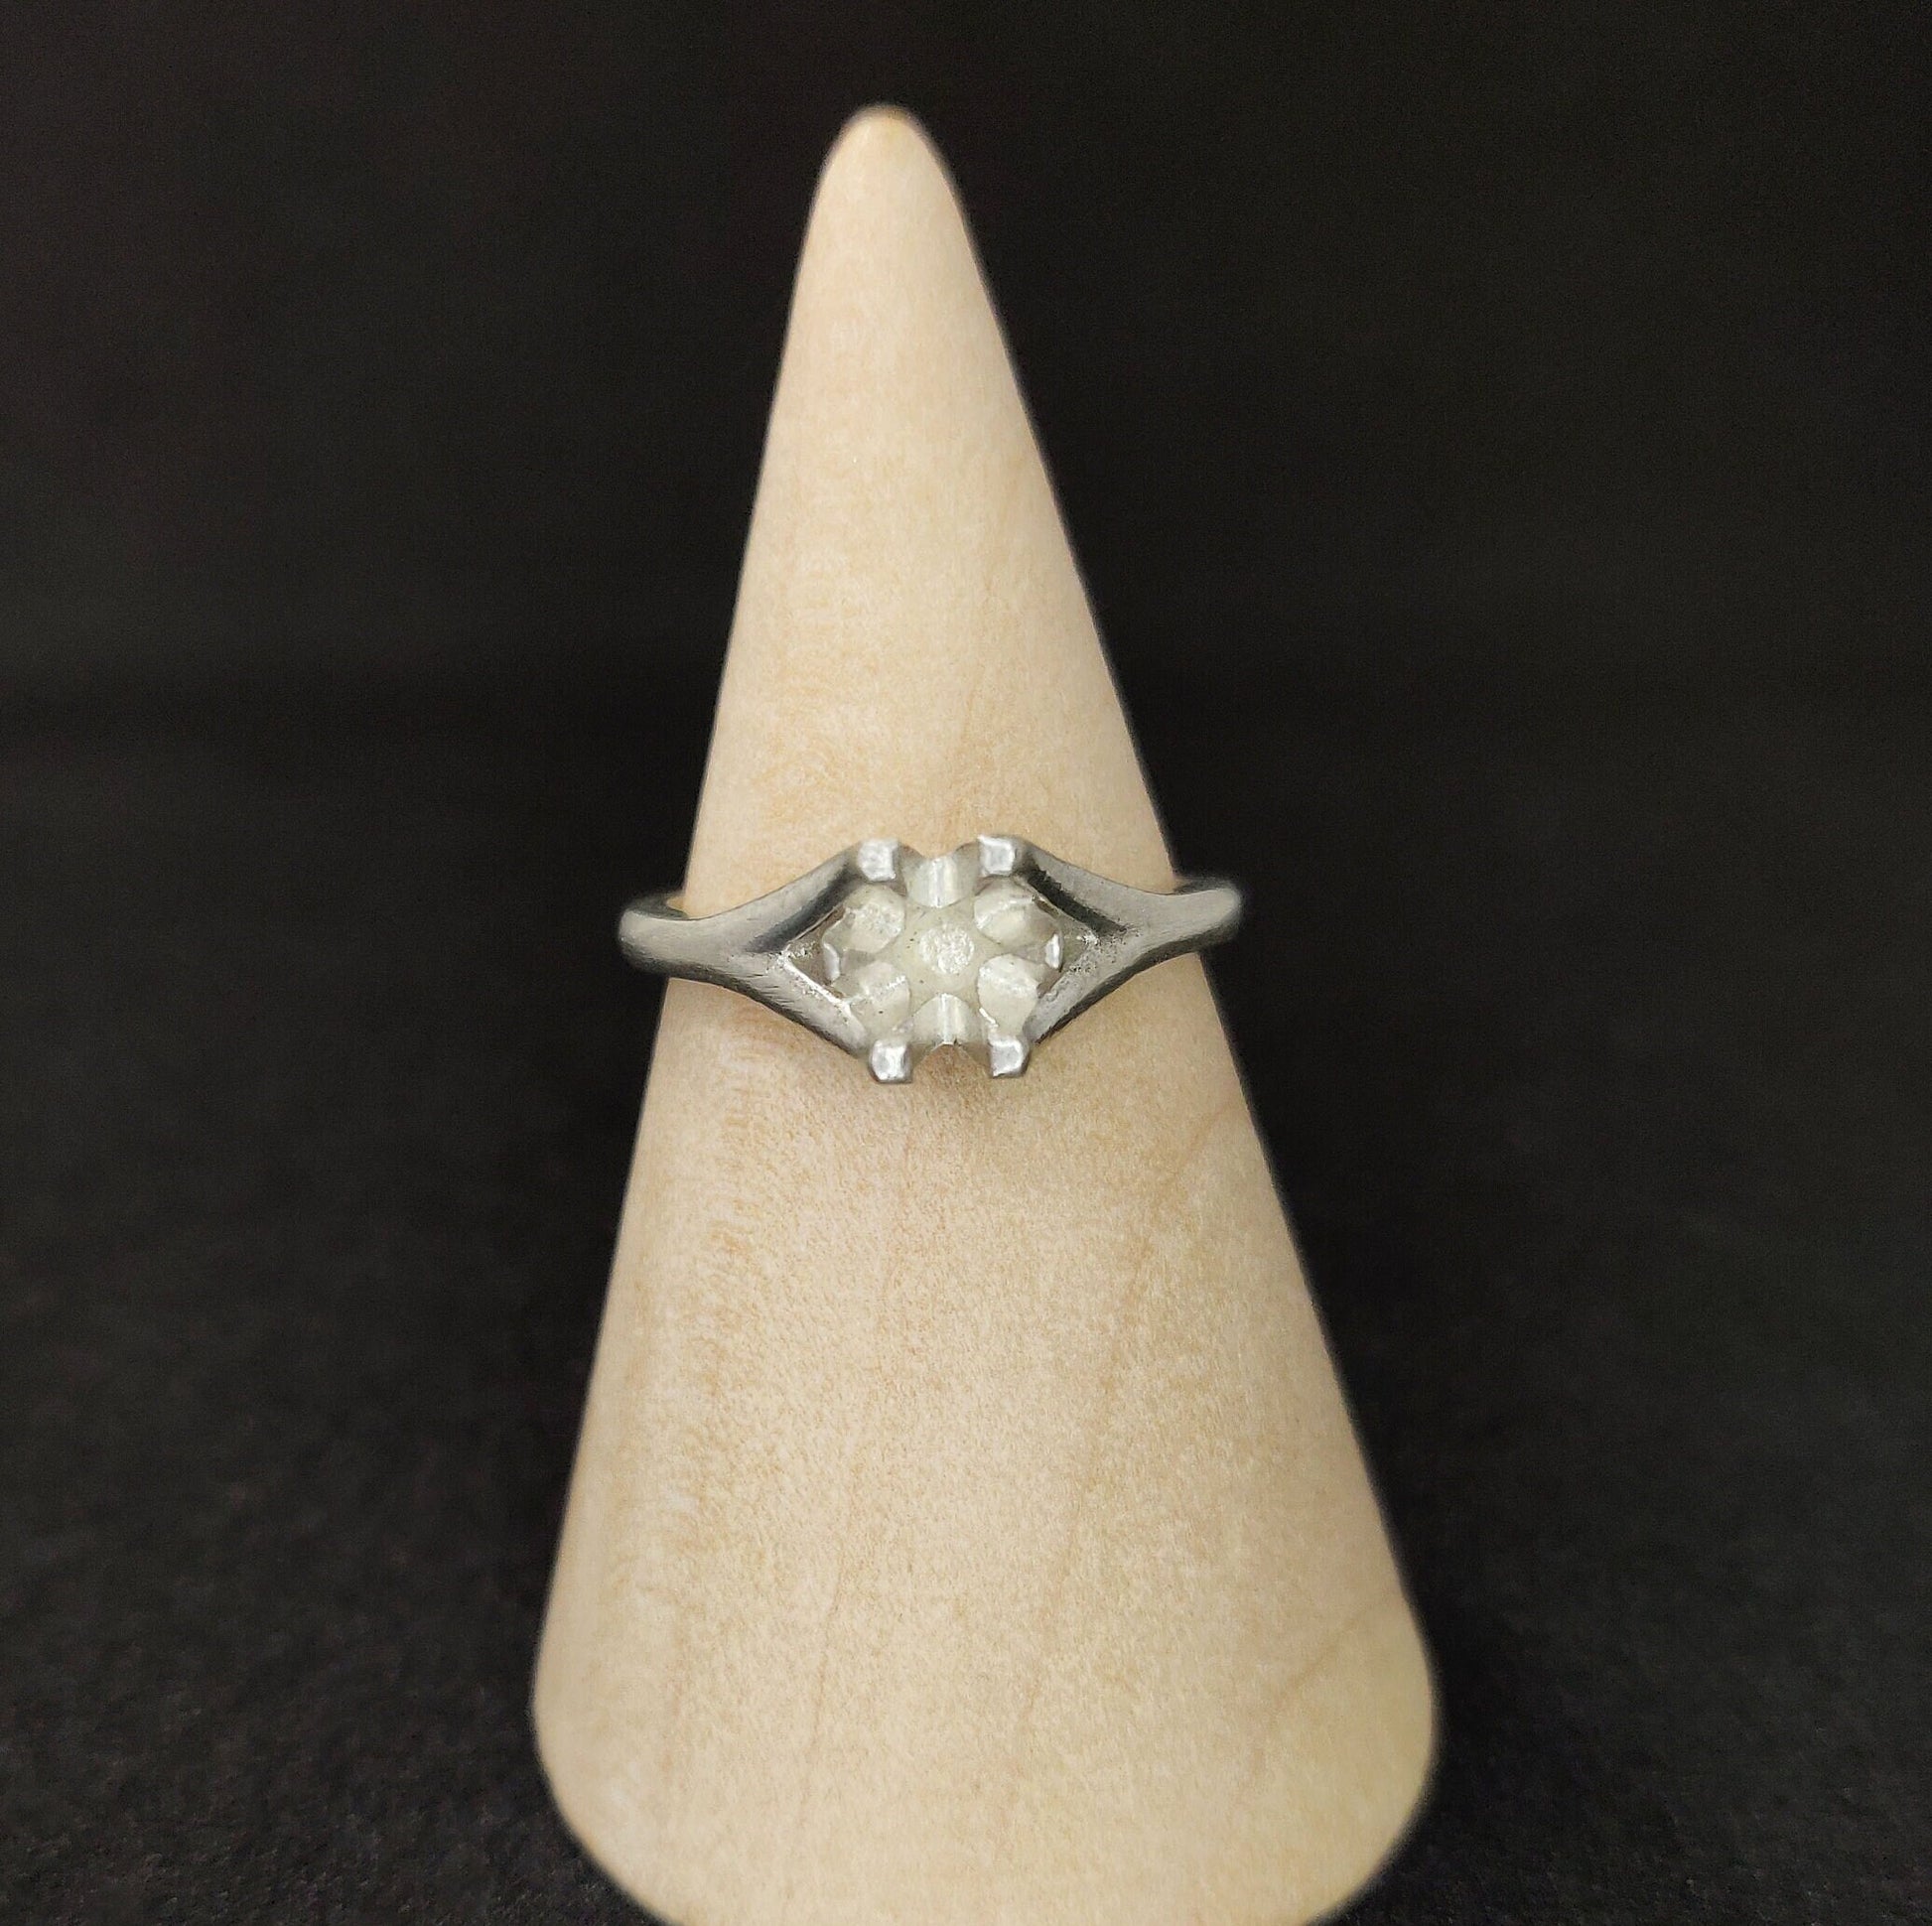 Six Prong Bezel Setting Ring. 5mm Round Prong Setting Cathedral Ring. Silver Cathedral Ring. Jewelry Making Supplies.